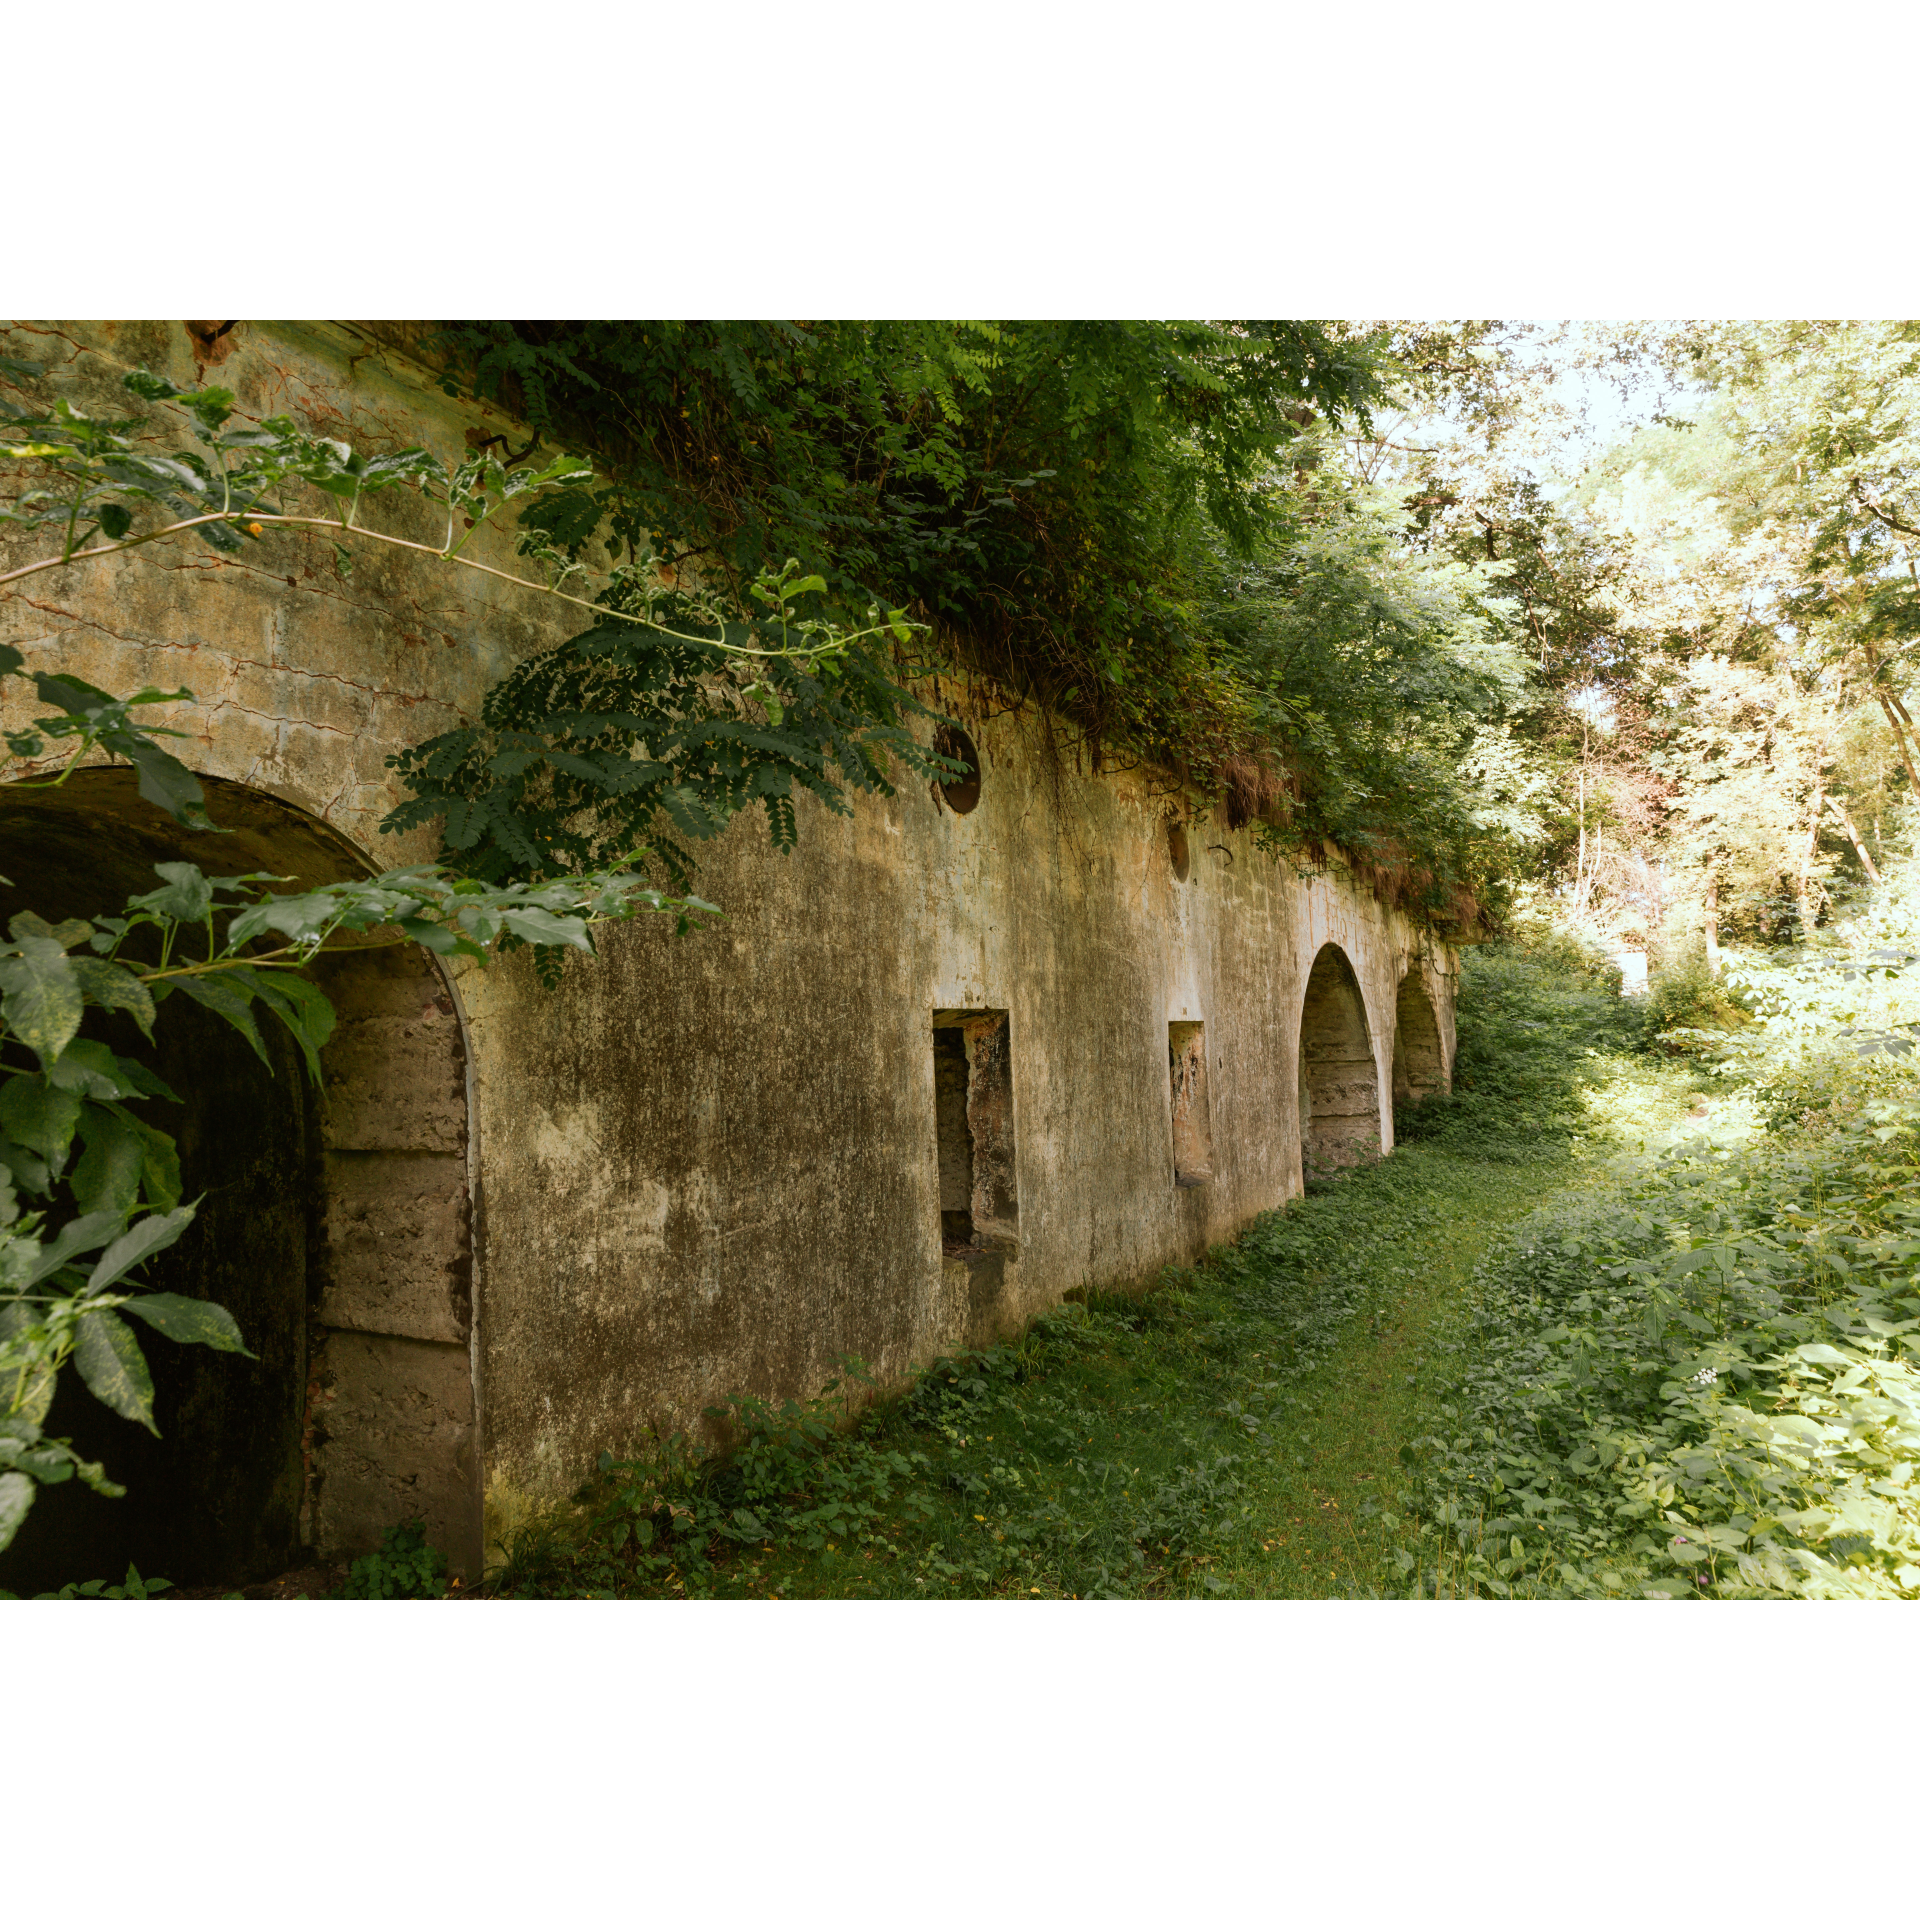 Overgrown Fort "Grochowce"